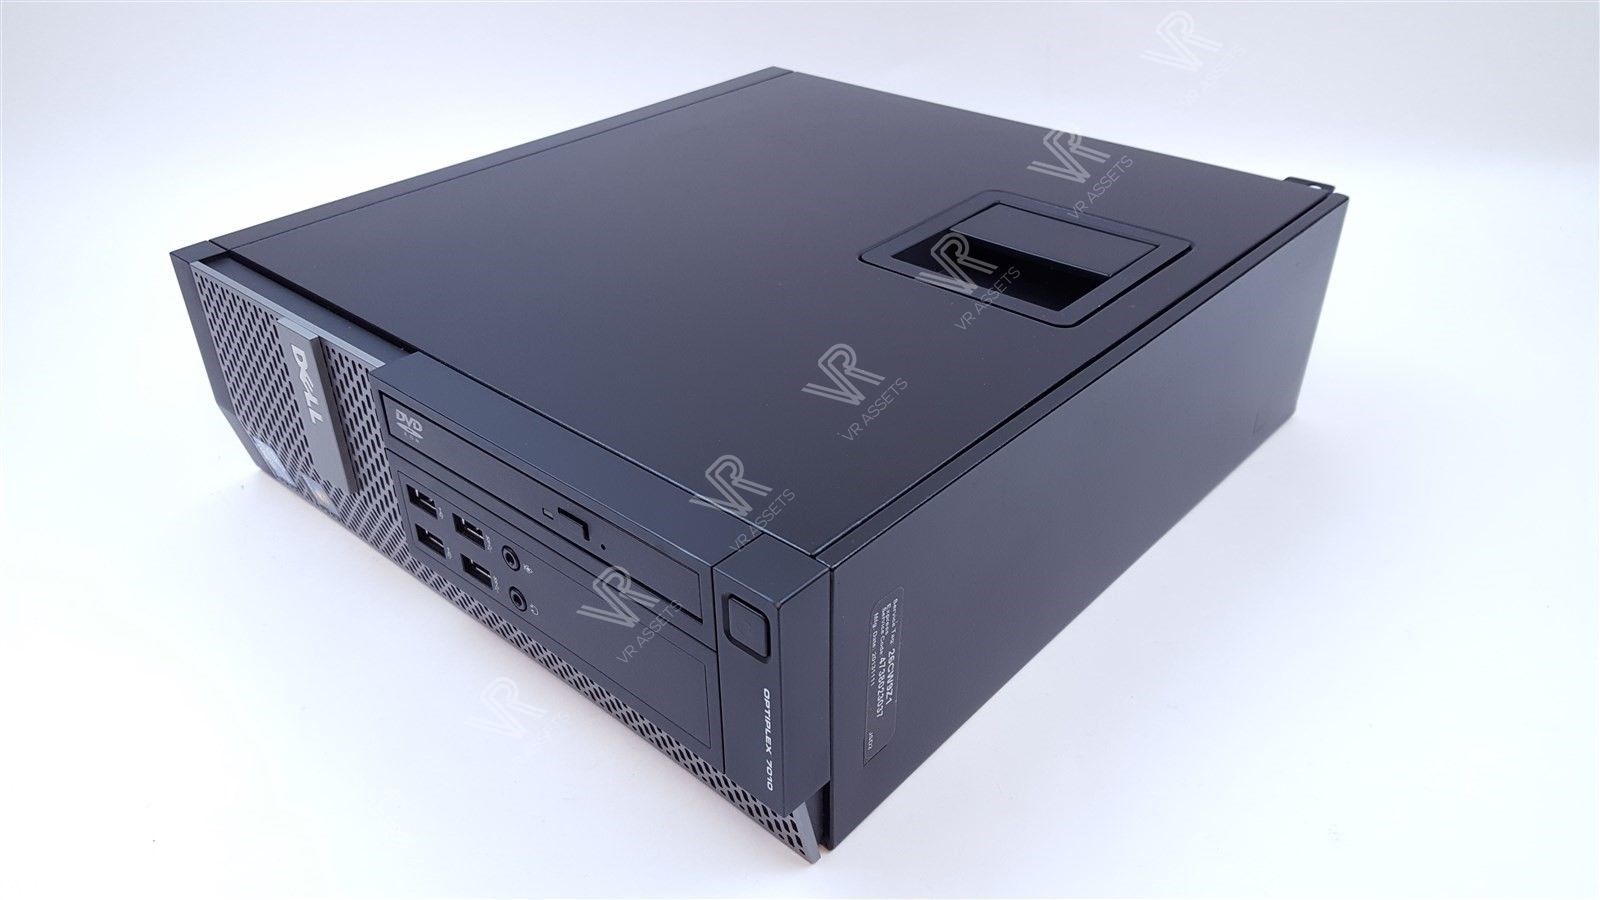 Dell Optiplex 7010 SFF I5-3570 Quad Core 4Gb 250Gb DVDRW Widows 10 Pro Desktop